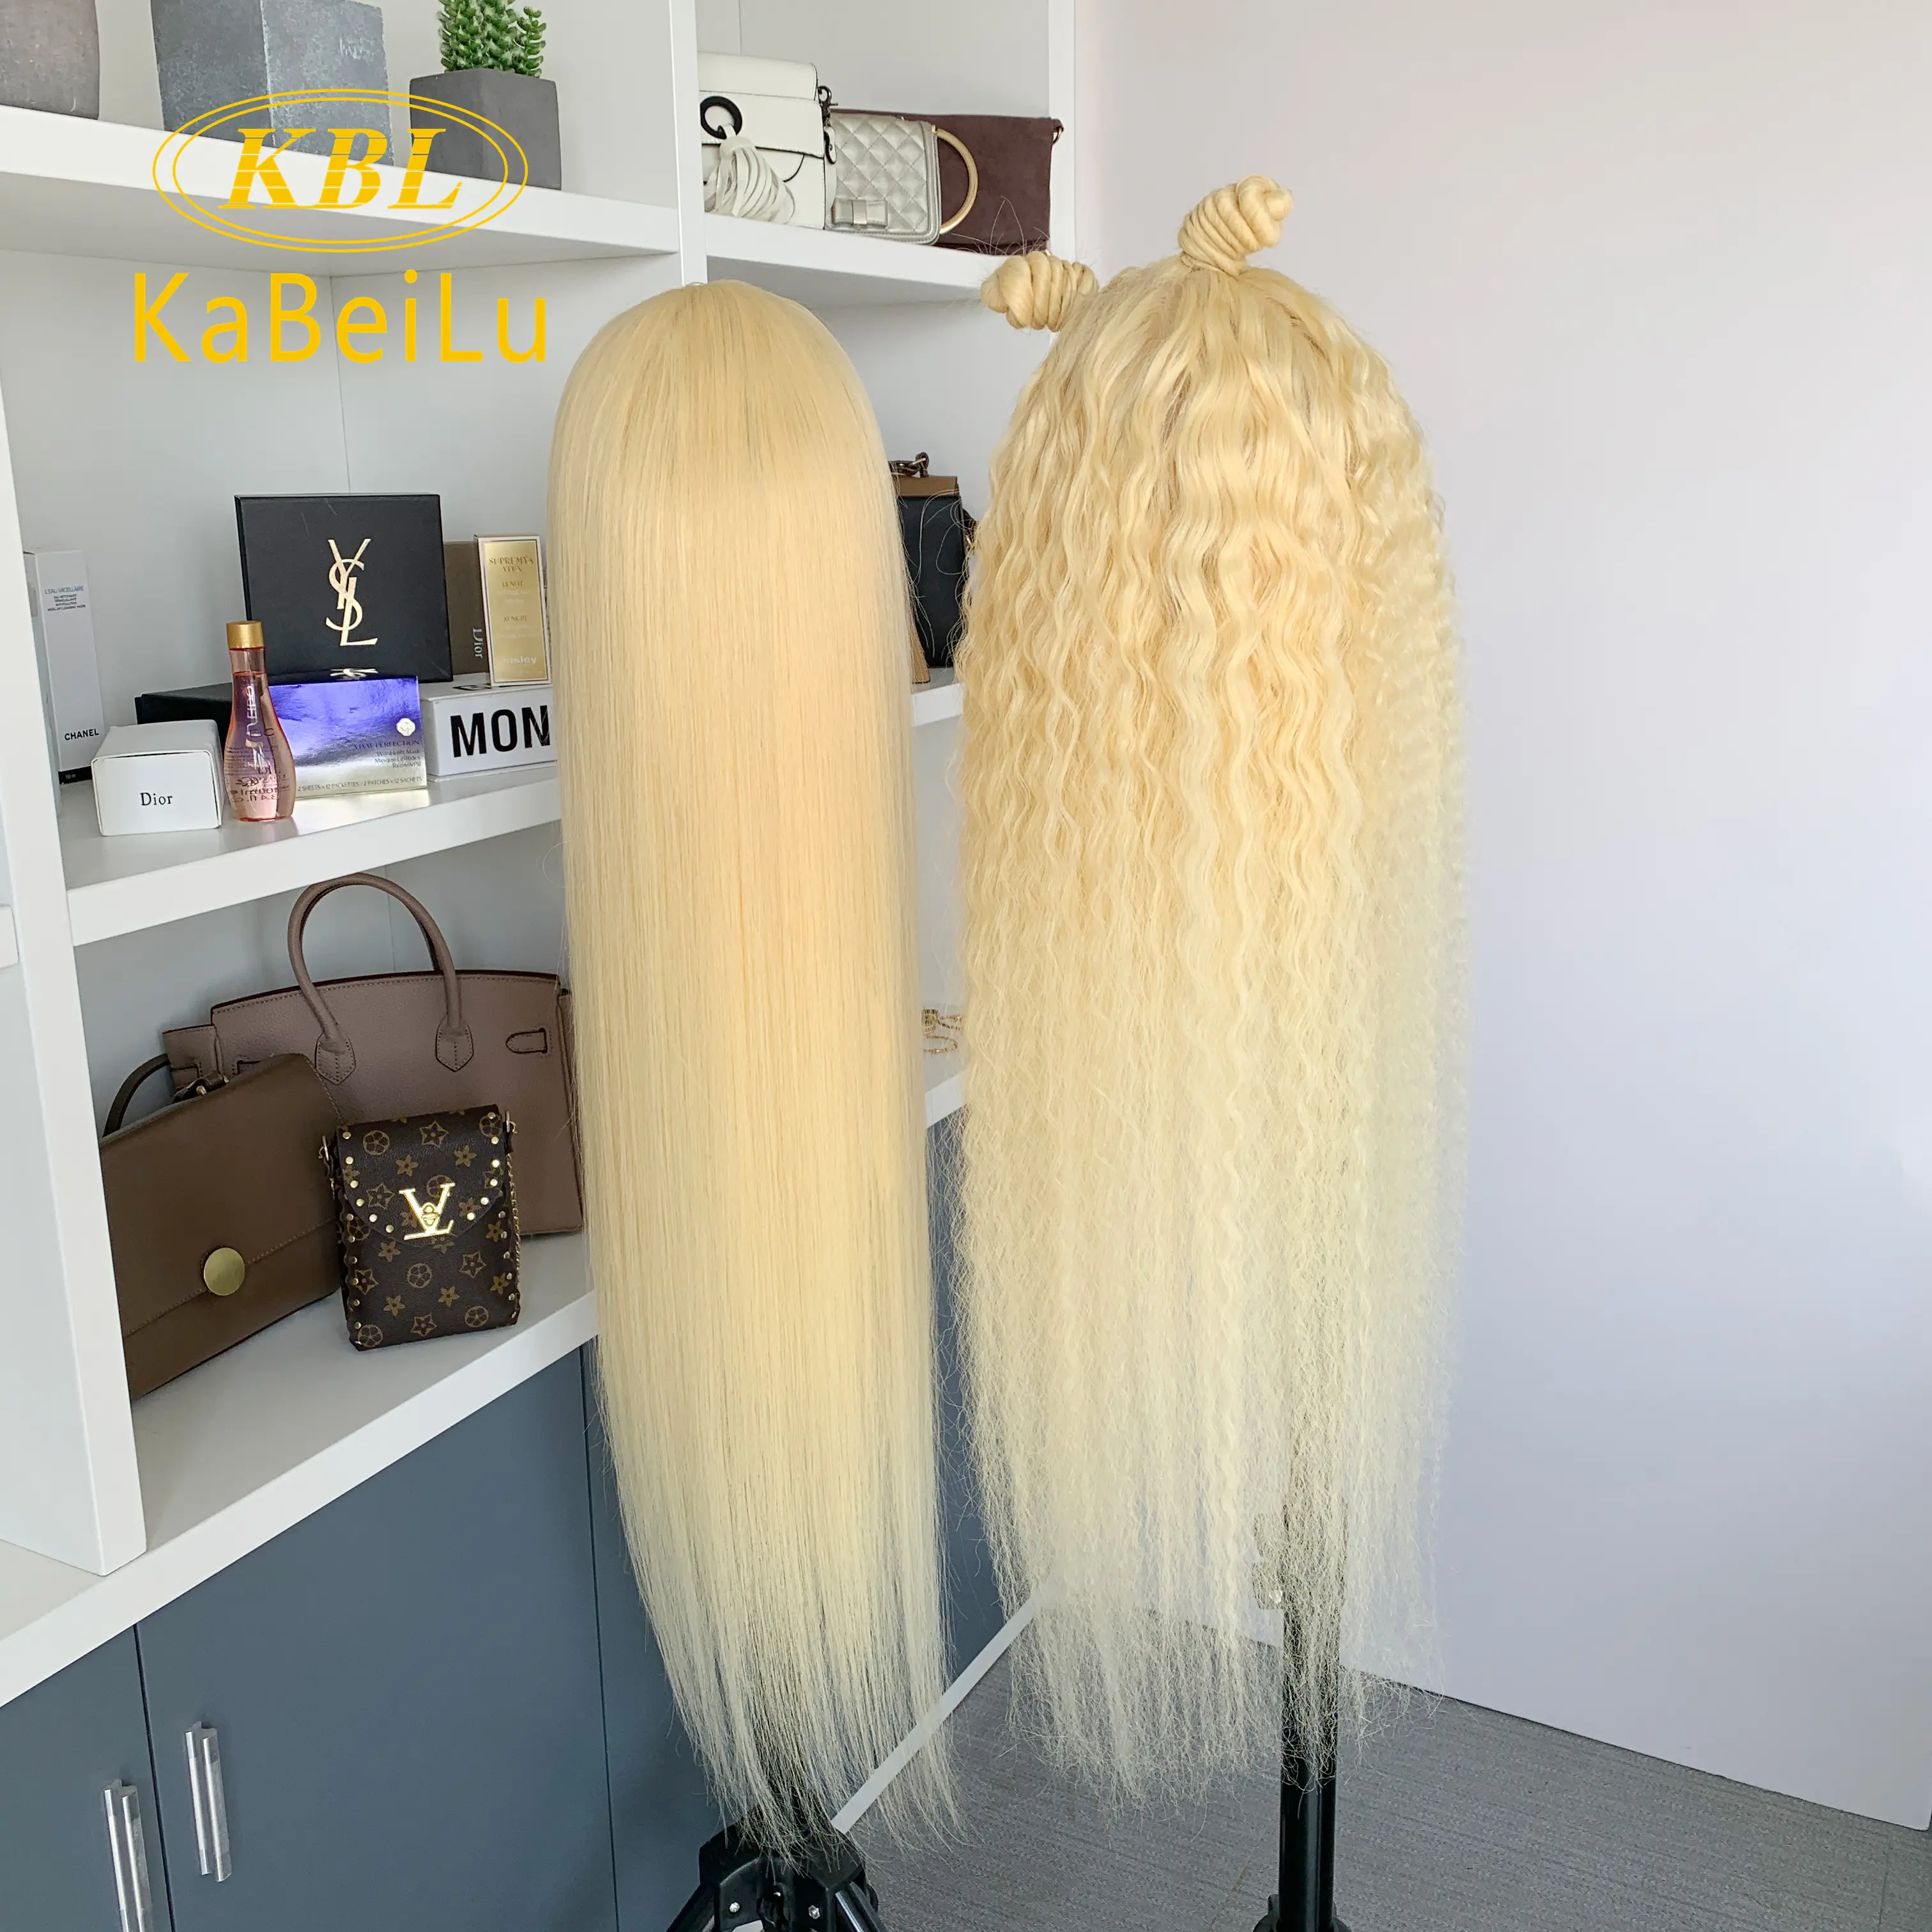 Kbl Goedkope Sangita Haar Rembours Haar, 100/Gekleurde Goedkope Goede Kwaliteit Weave, 613 Diepe Body Wave Krullend Haar Bundels Stuk